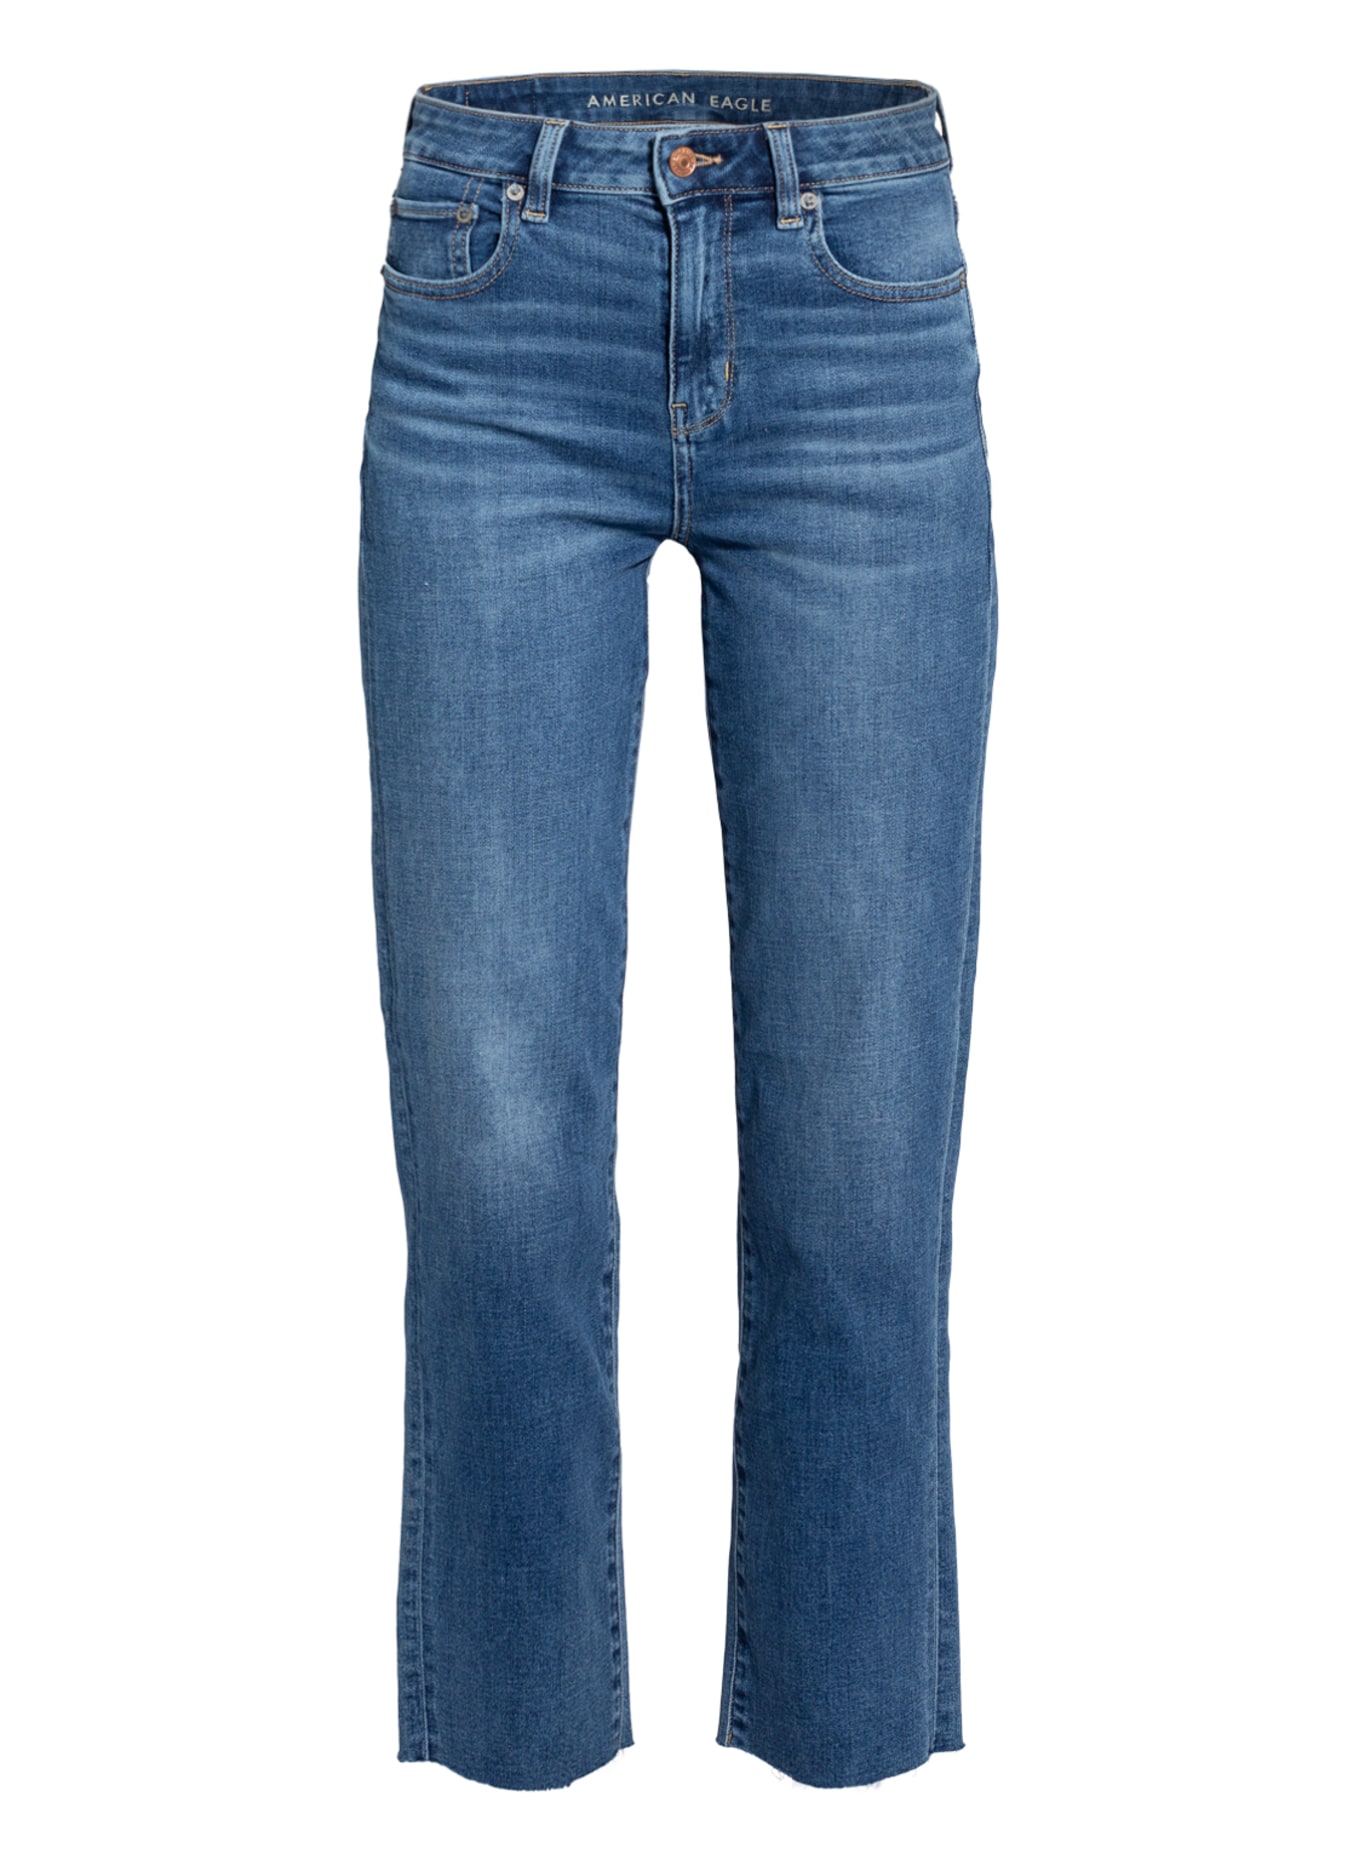 AMERICAN EAGLE Jeans, Farbe: 334 DEEP INDIGO (Bild 1)